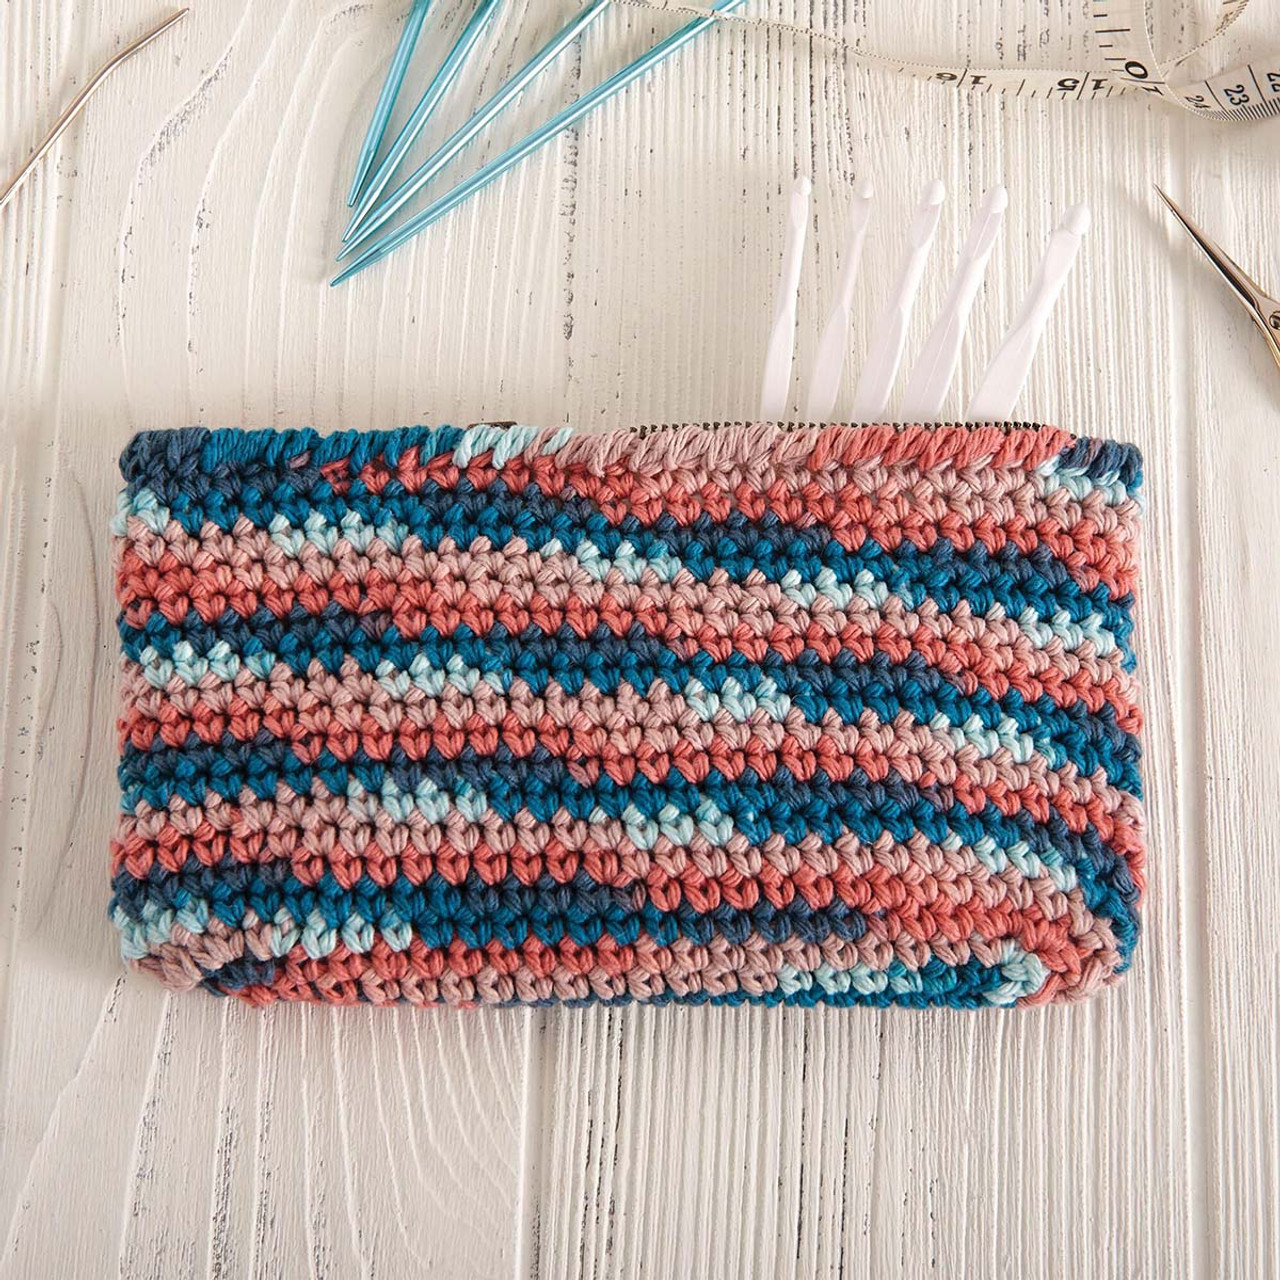 Lily Sugar'n Cream Yarn Crochet Patterns - Easy Crochet Patterns